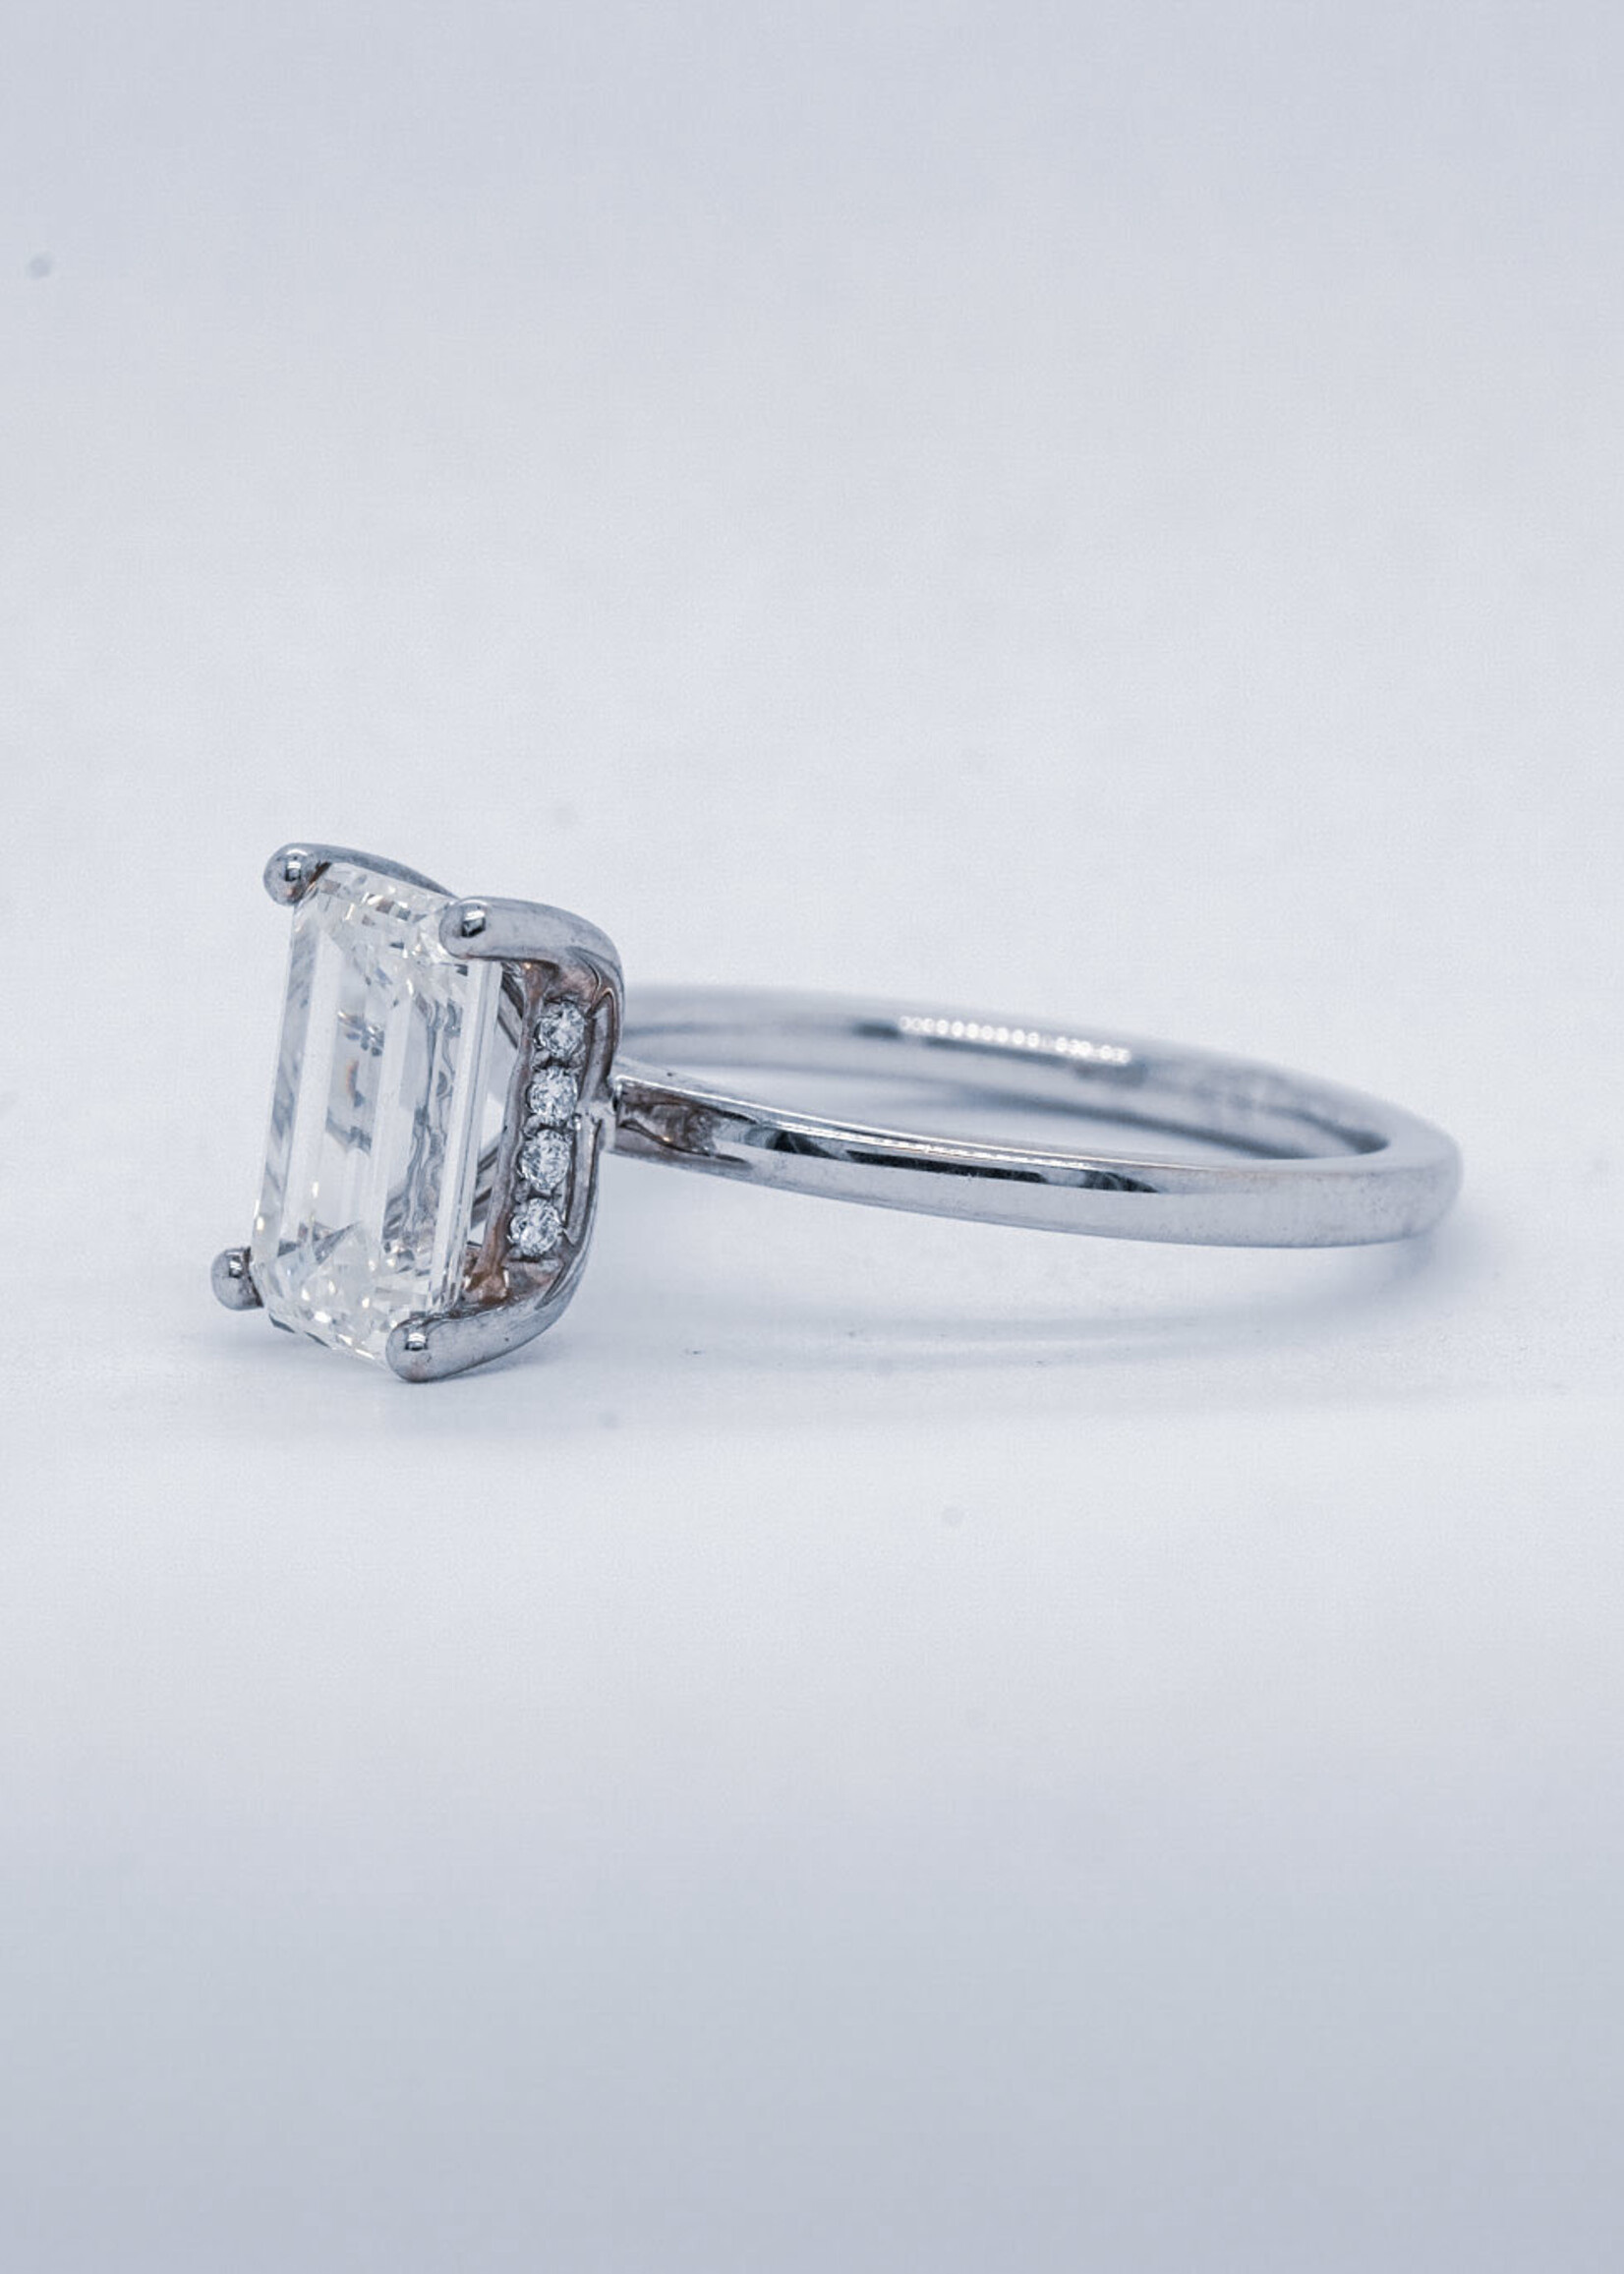 18KW 3.61g 2.13ctw (2.01ctr) J/VVS2 GIA Emerald Cut Diamond Hidden Halo Engagement Ring (size 6.5)